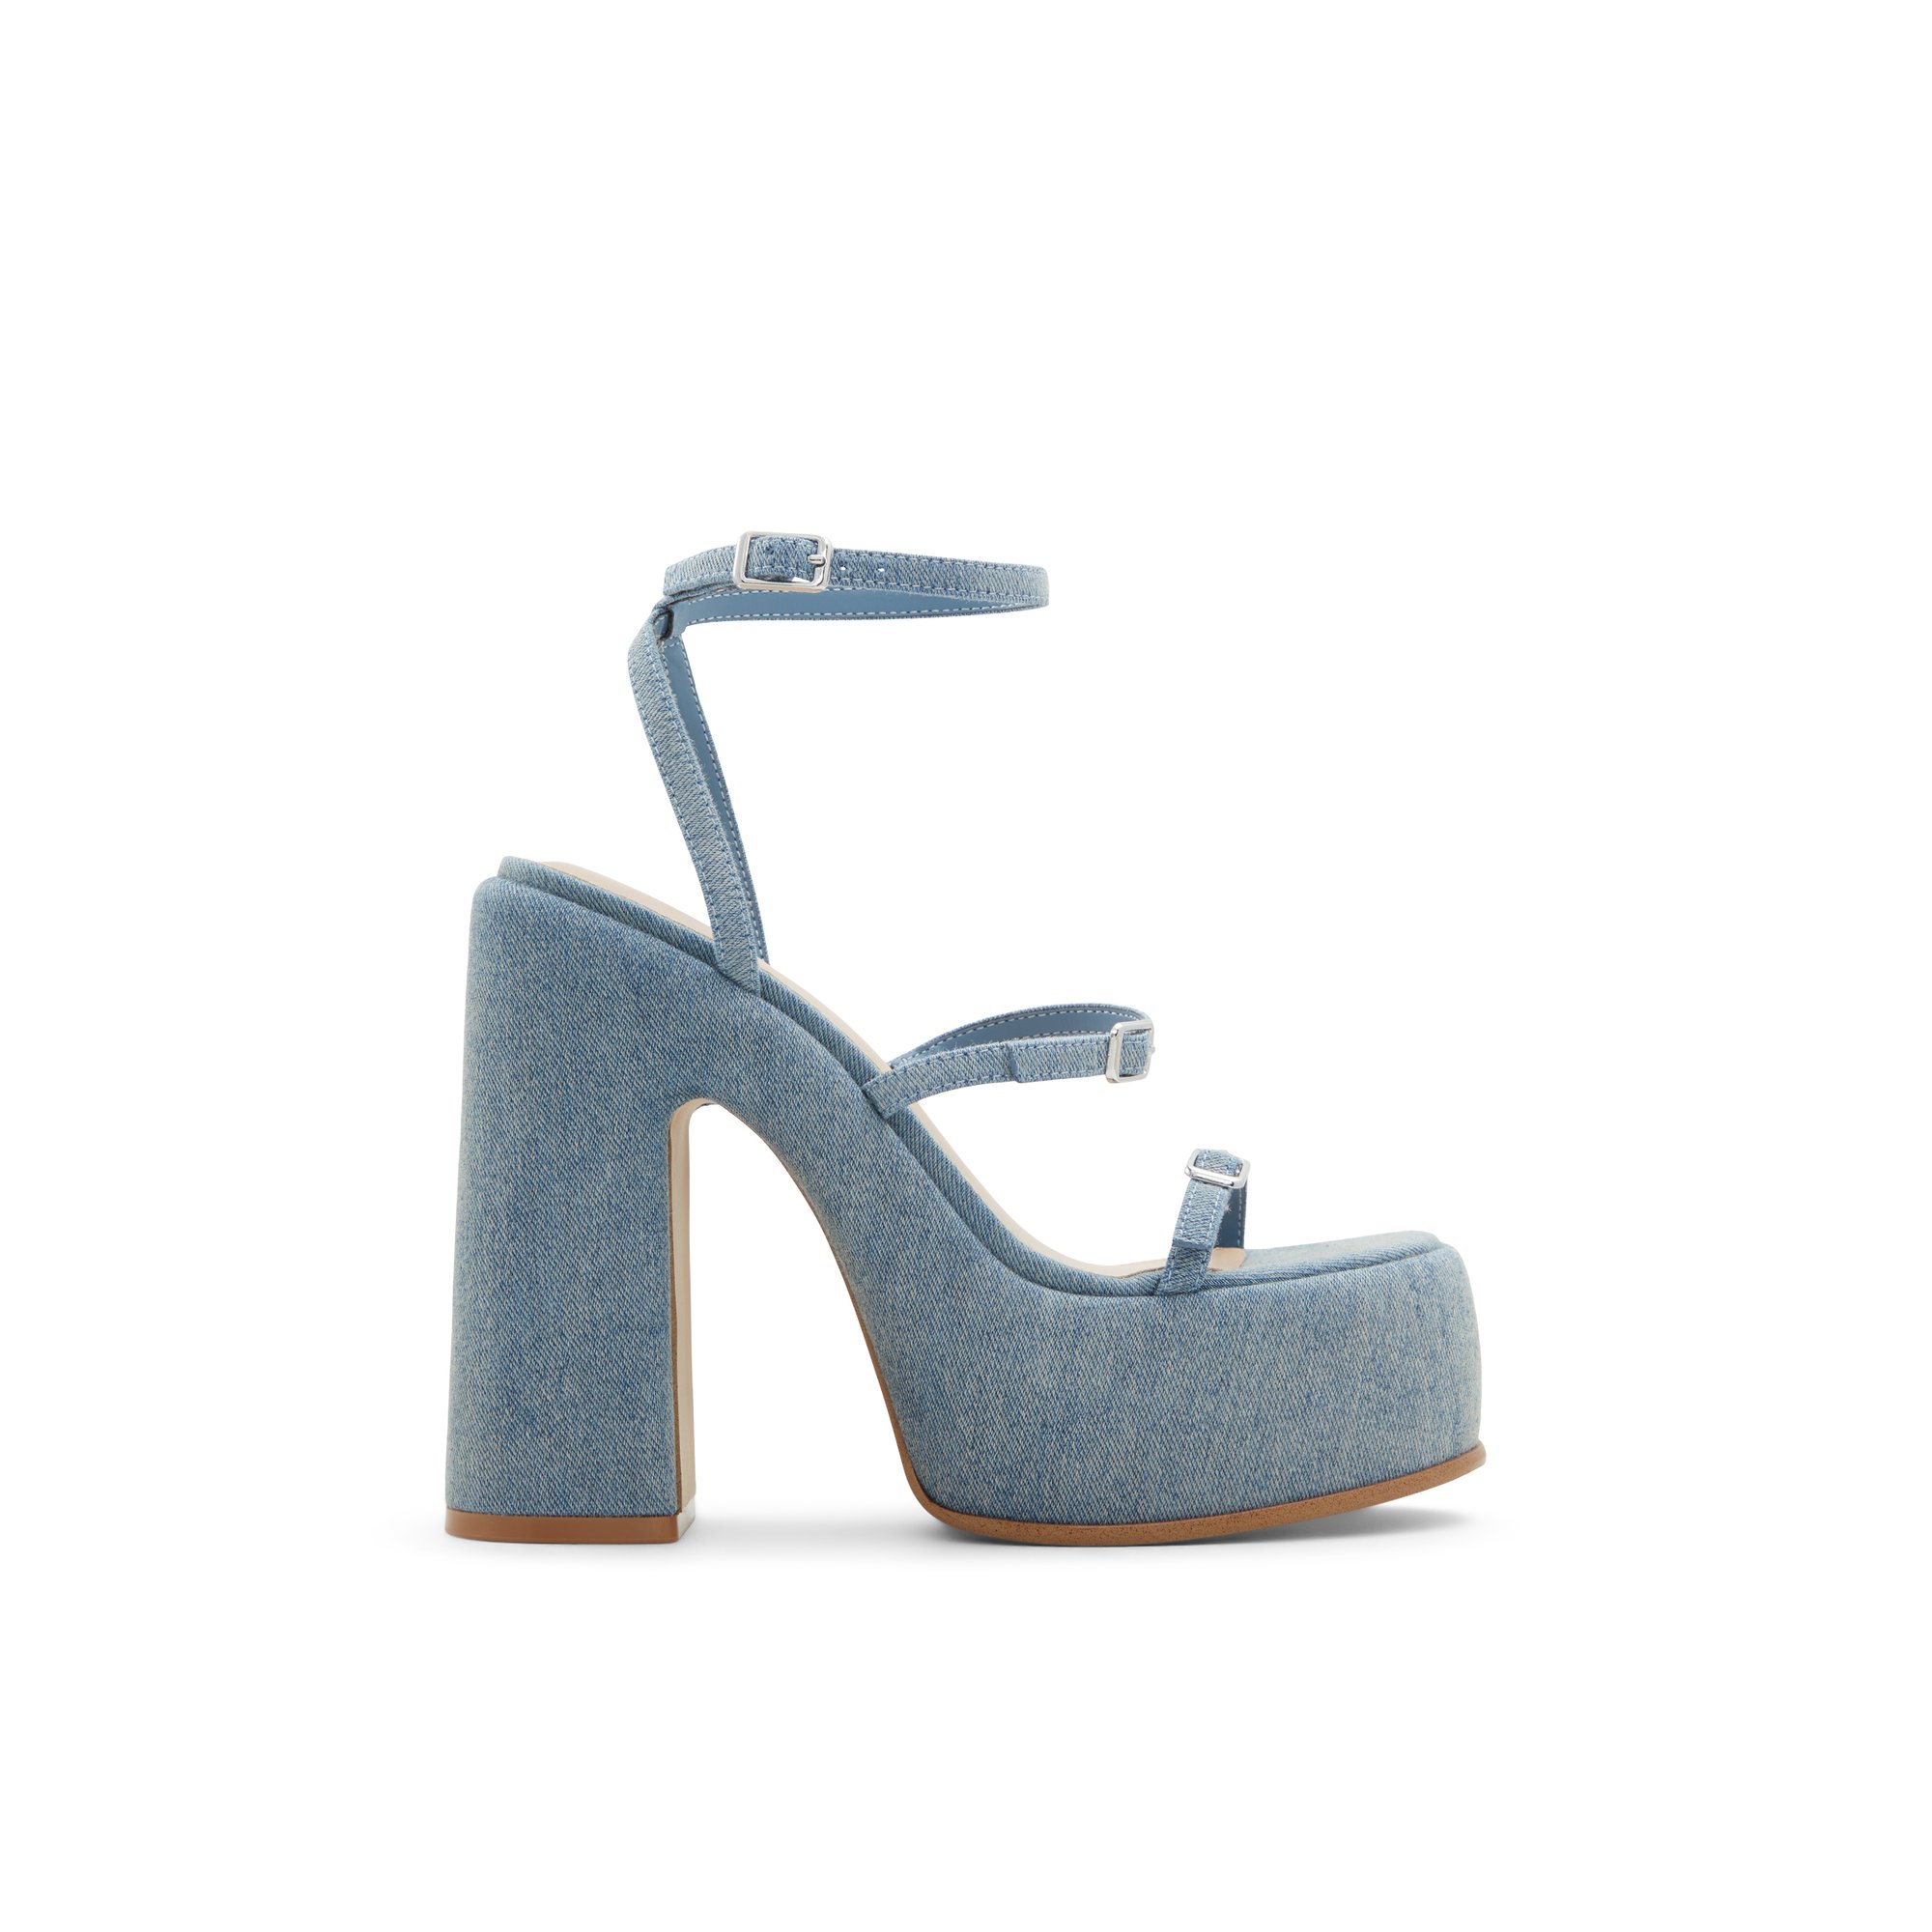 ALDO Joden - Women's Platform Sandal Sandals - Blue